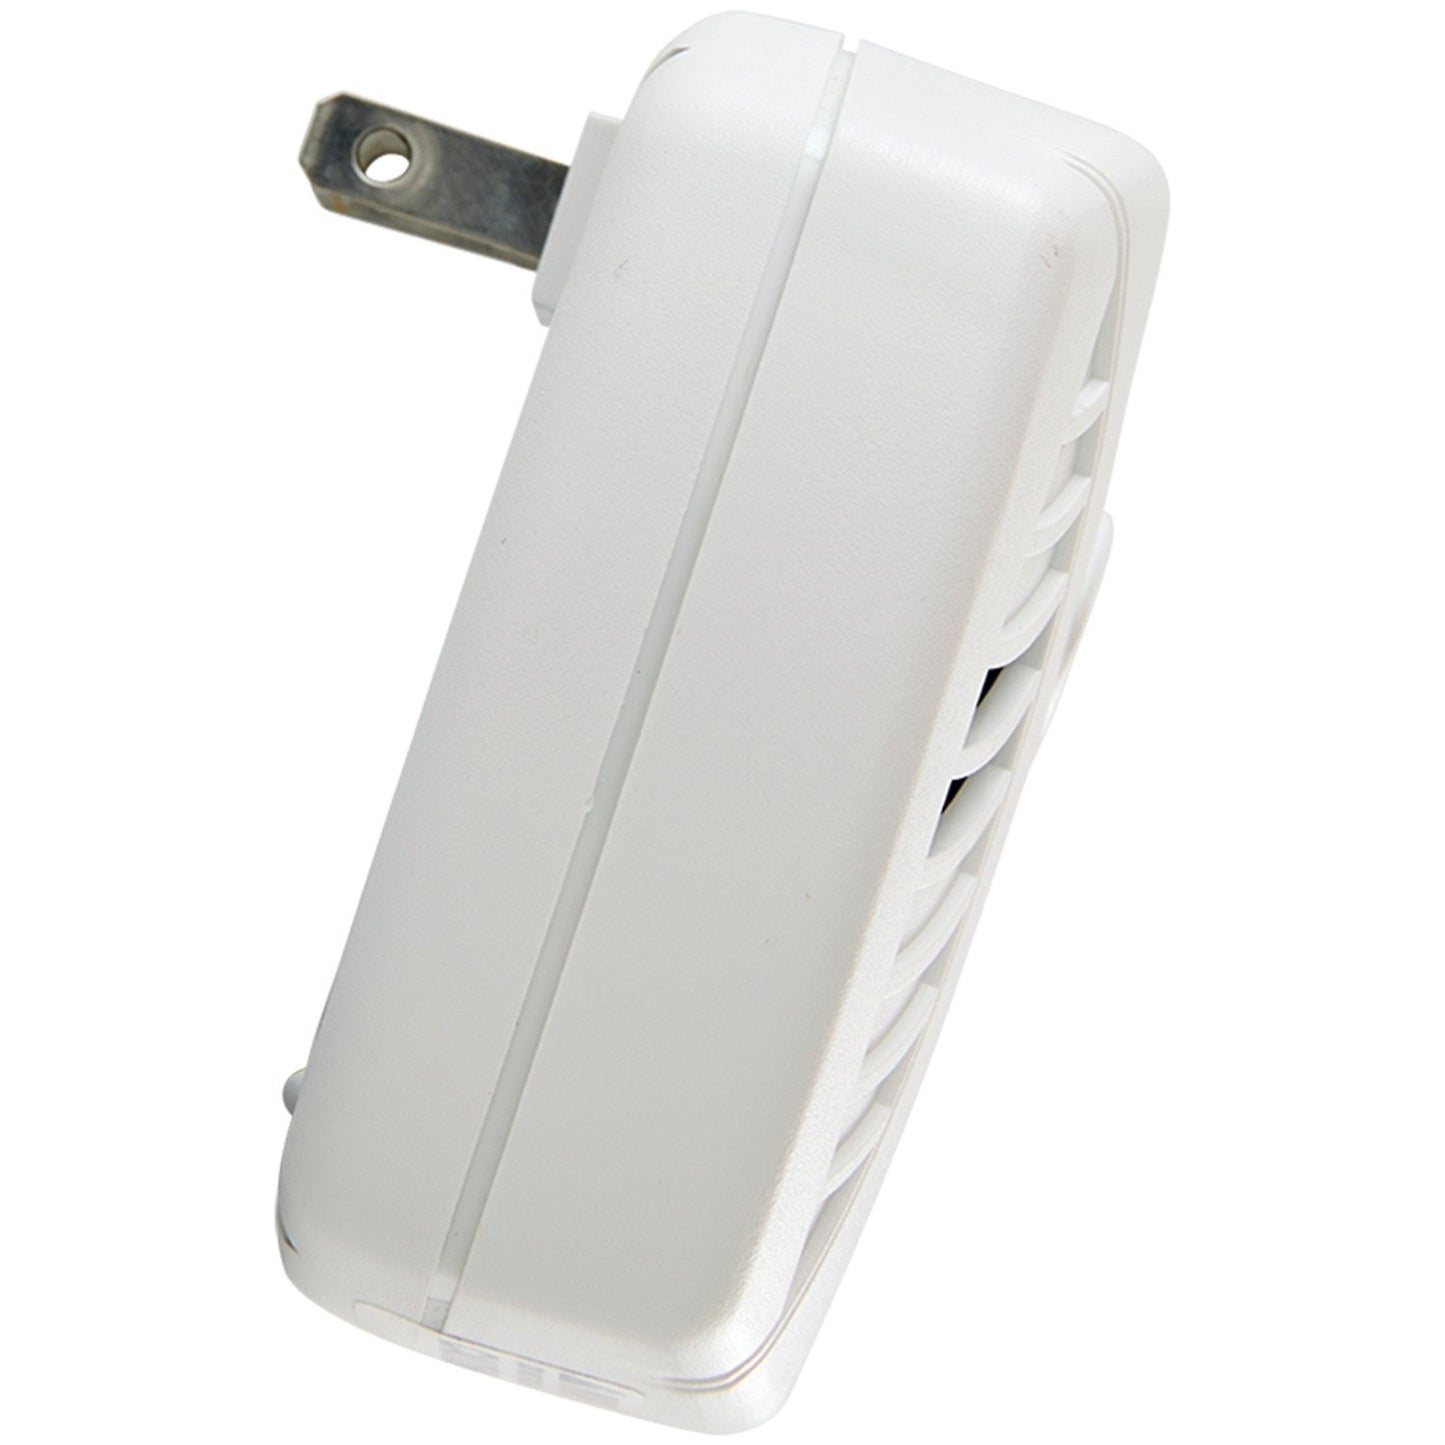 First Alert 1039734 CO605 Plug-in Carbon Monoxide Alarm with Battery Backup